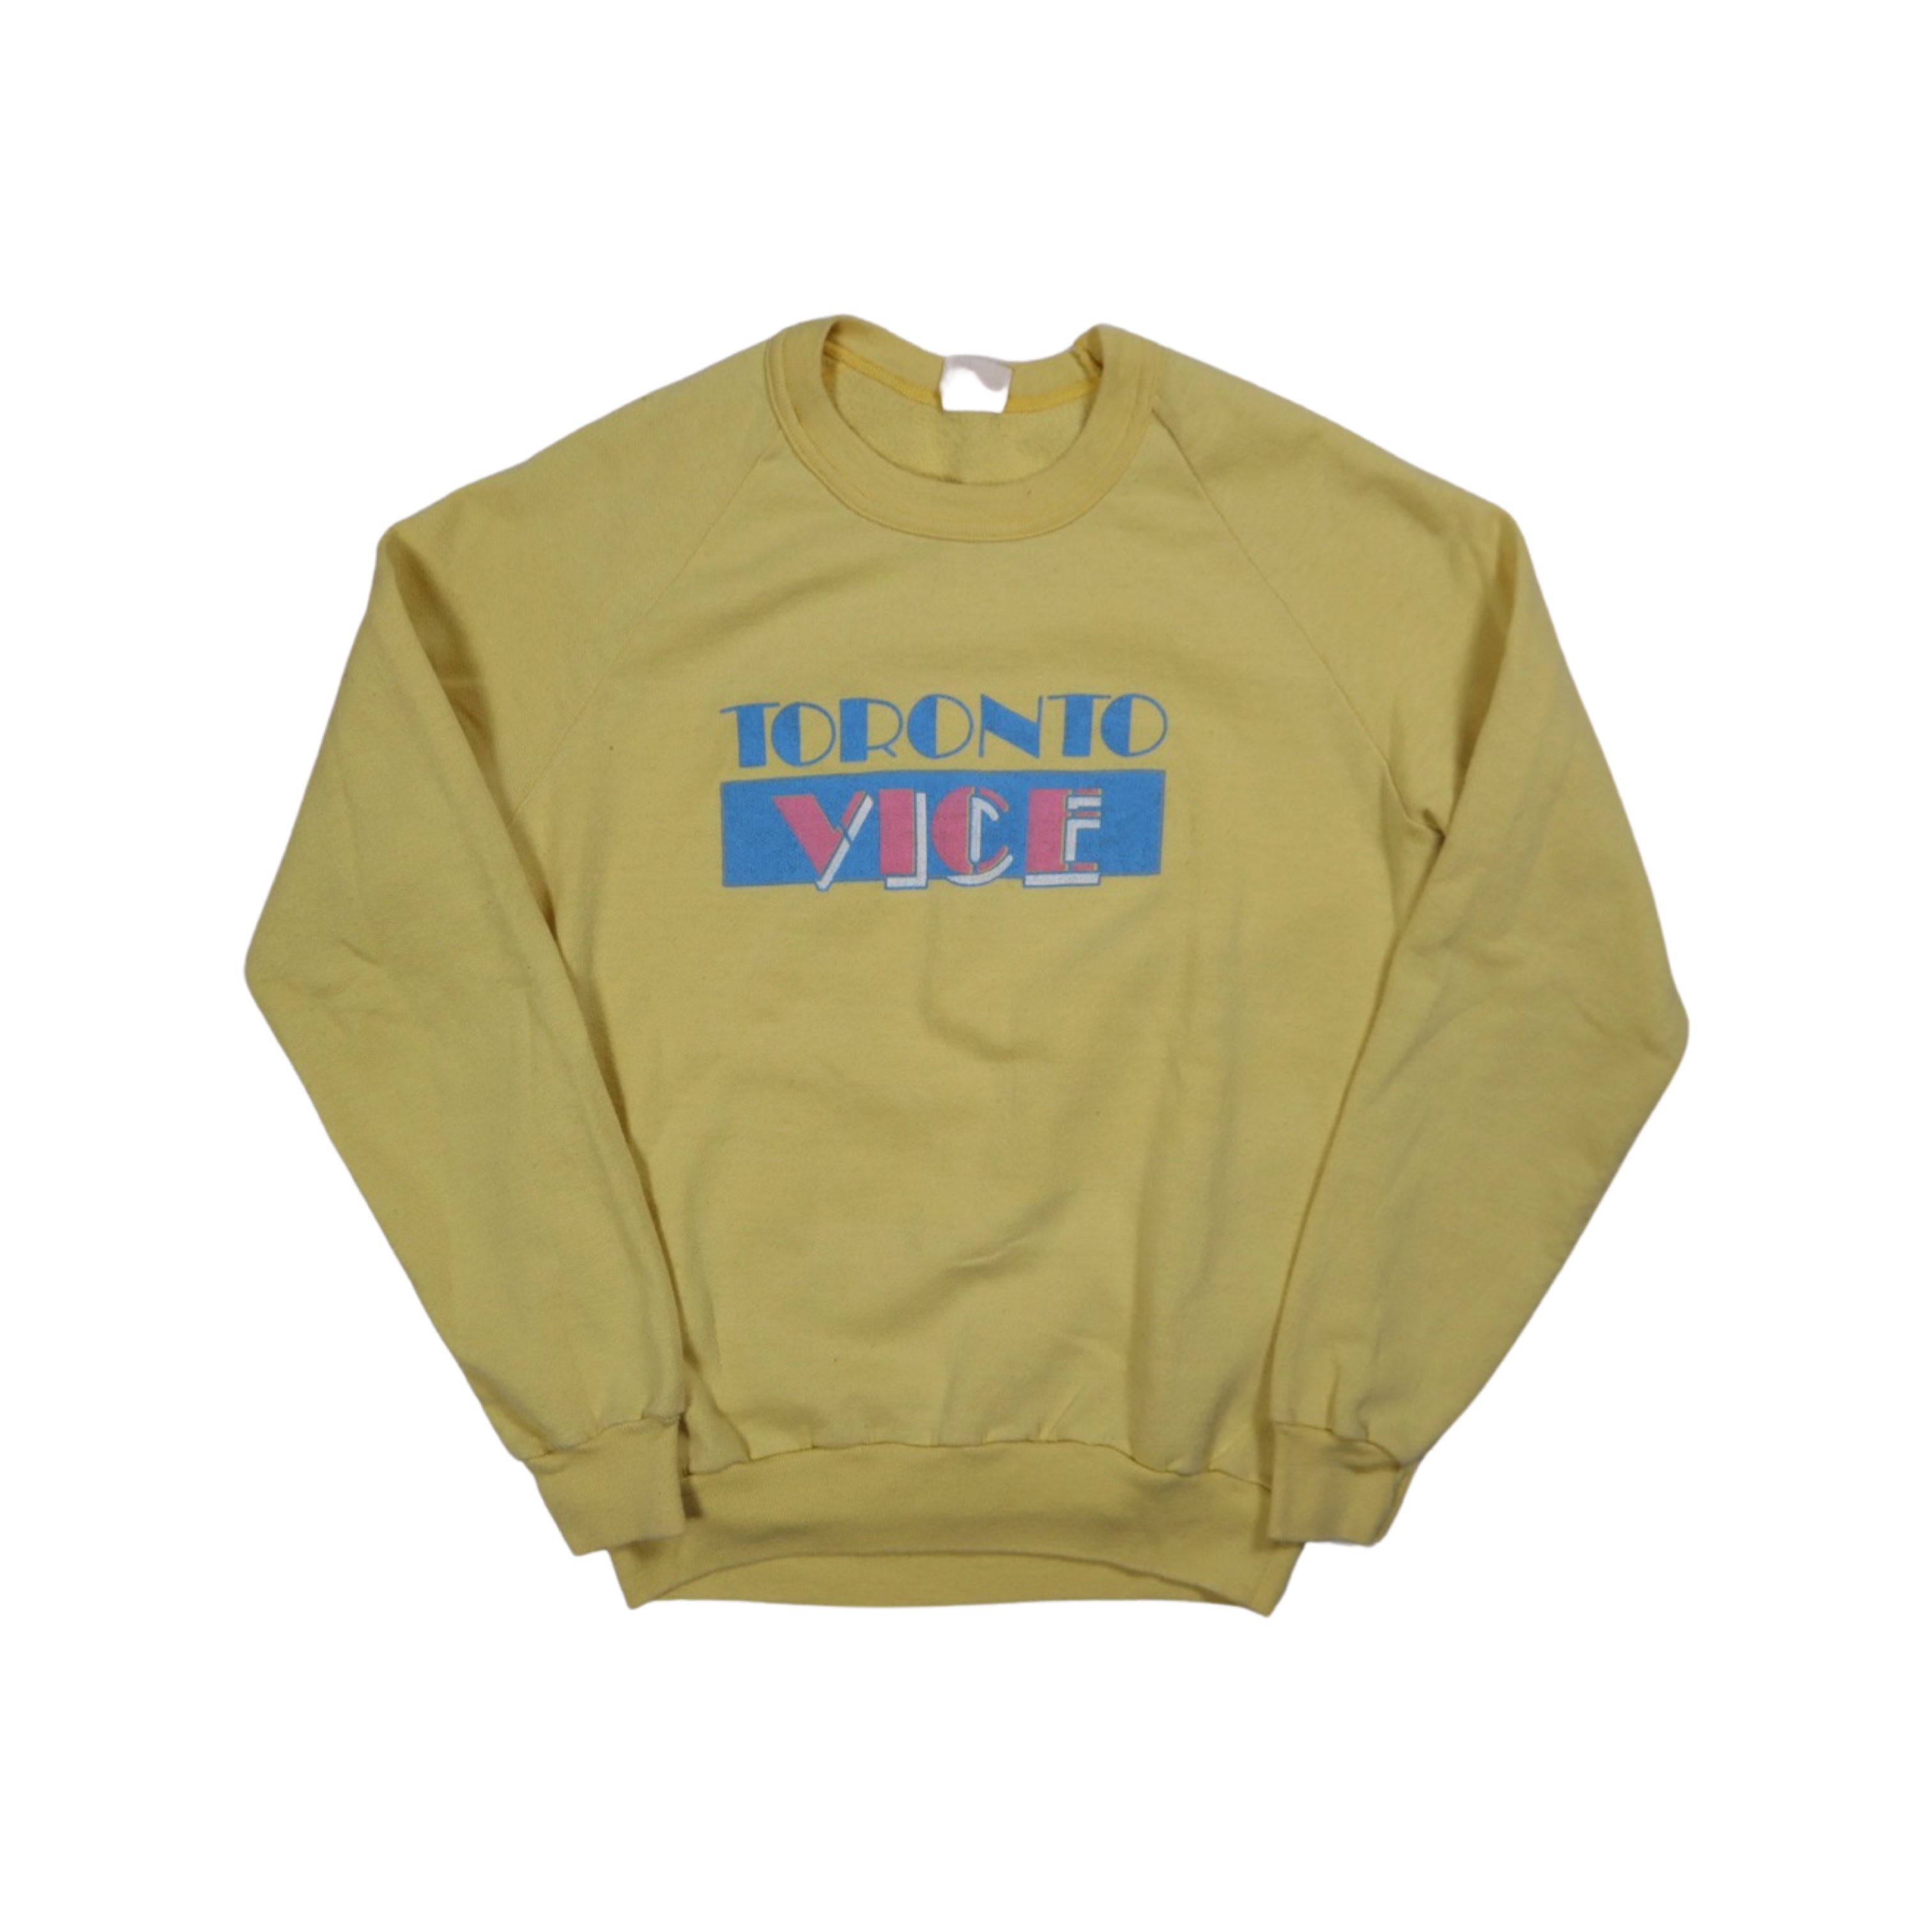 Toronto Vice 80s Sweater (Small)